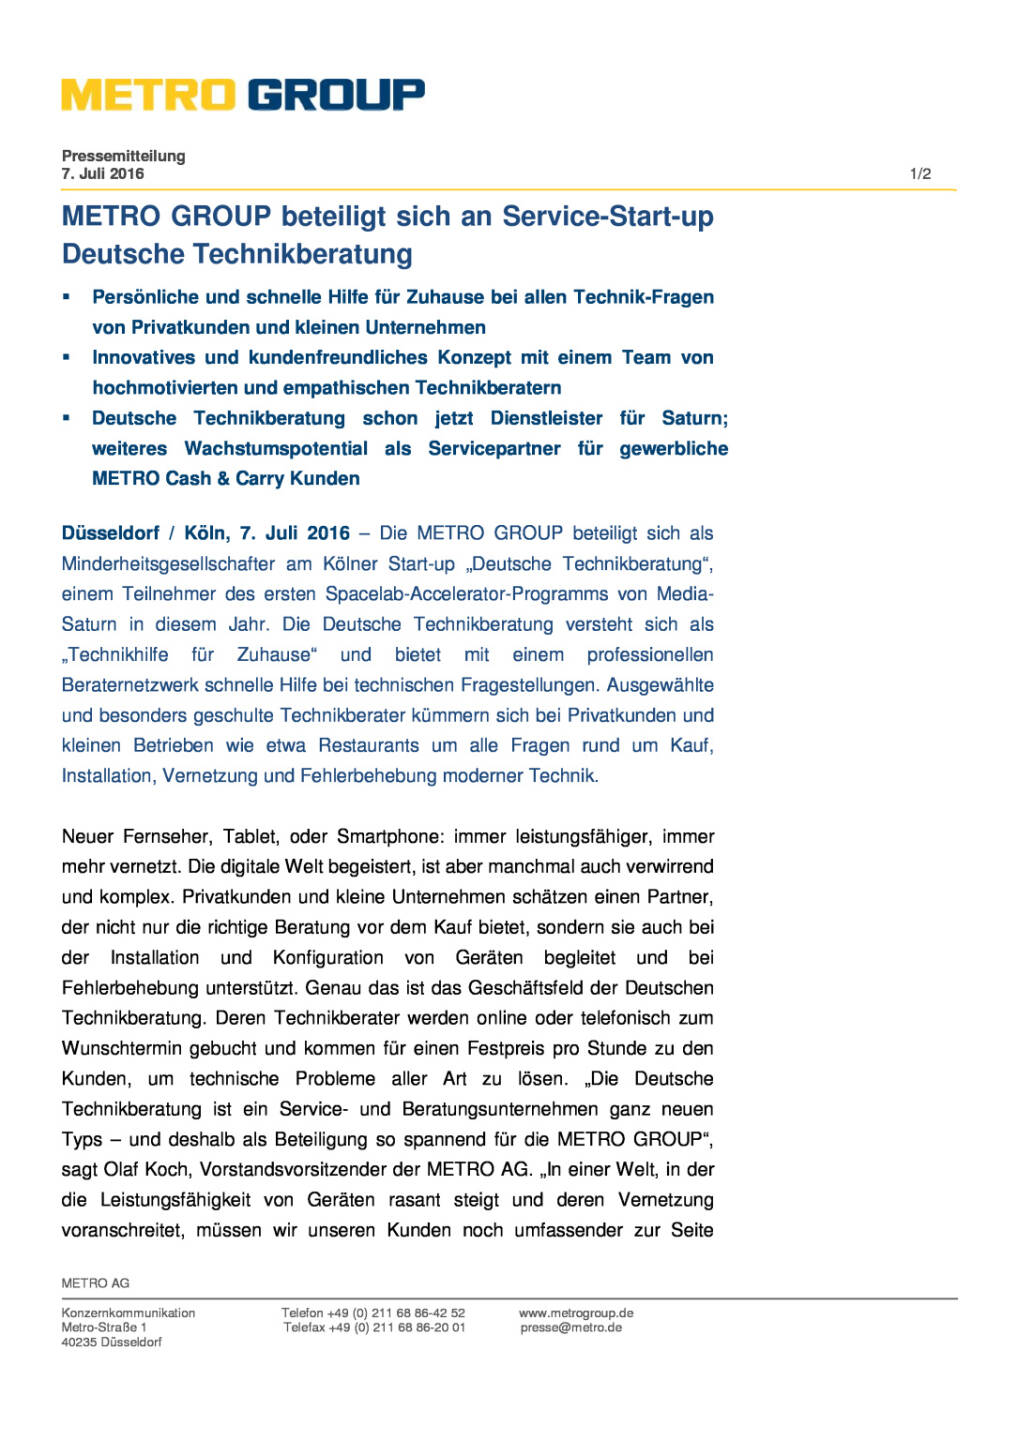 Metro Group beteiligt sich an Service-Start-up Deutsche Technikberatung, Seite 1/2, komplettes Dokument unter http://boerse-social.com/static/uploads/file_1357_metro_group_beteiligt_sich_an_service-start-up_deutsche_technikberatung.pdf